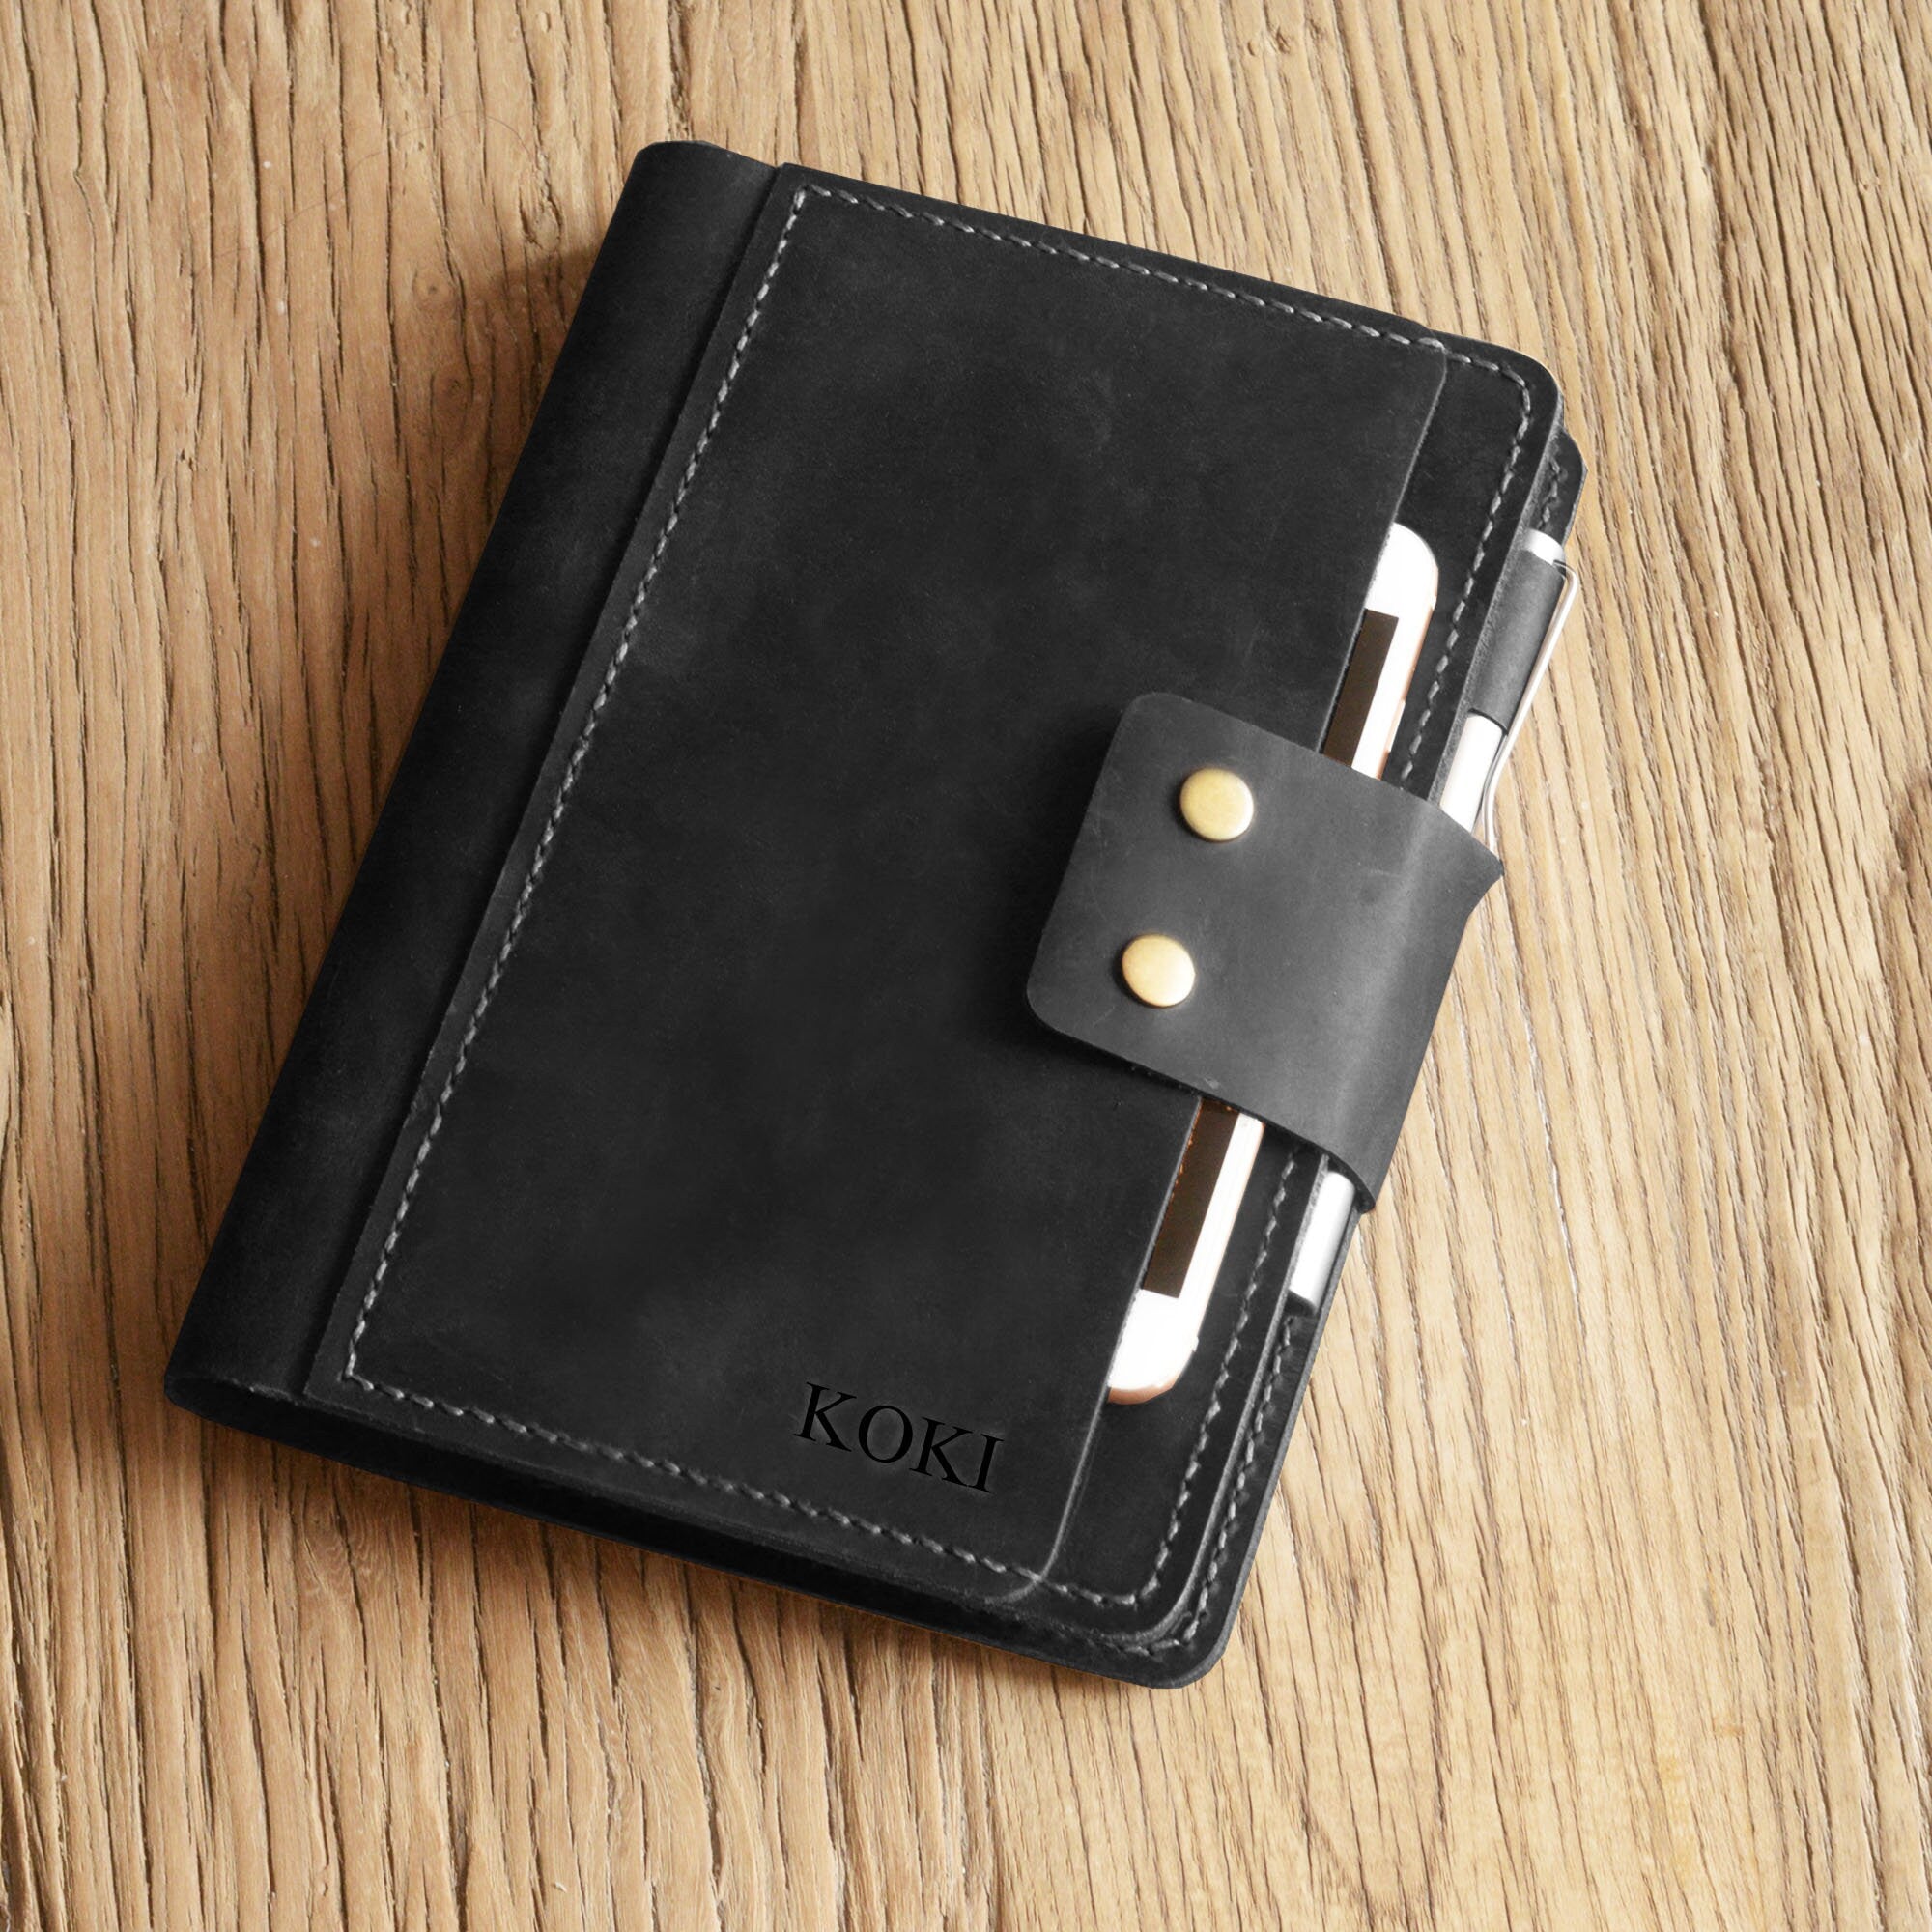 Koki Leather Card Holder Wallet - Black